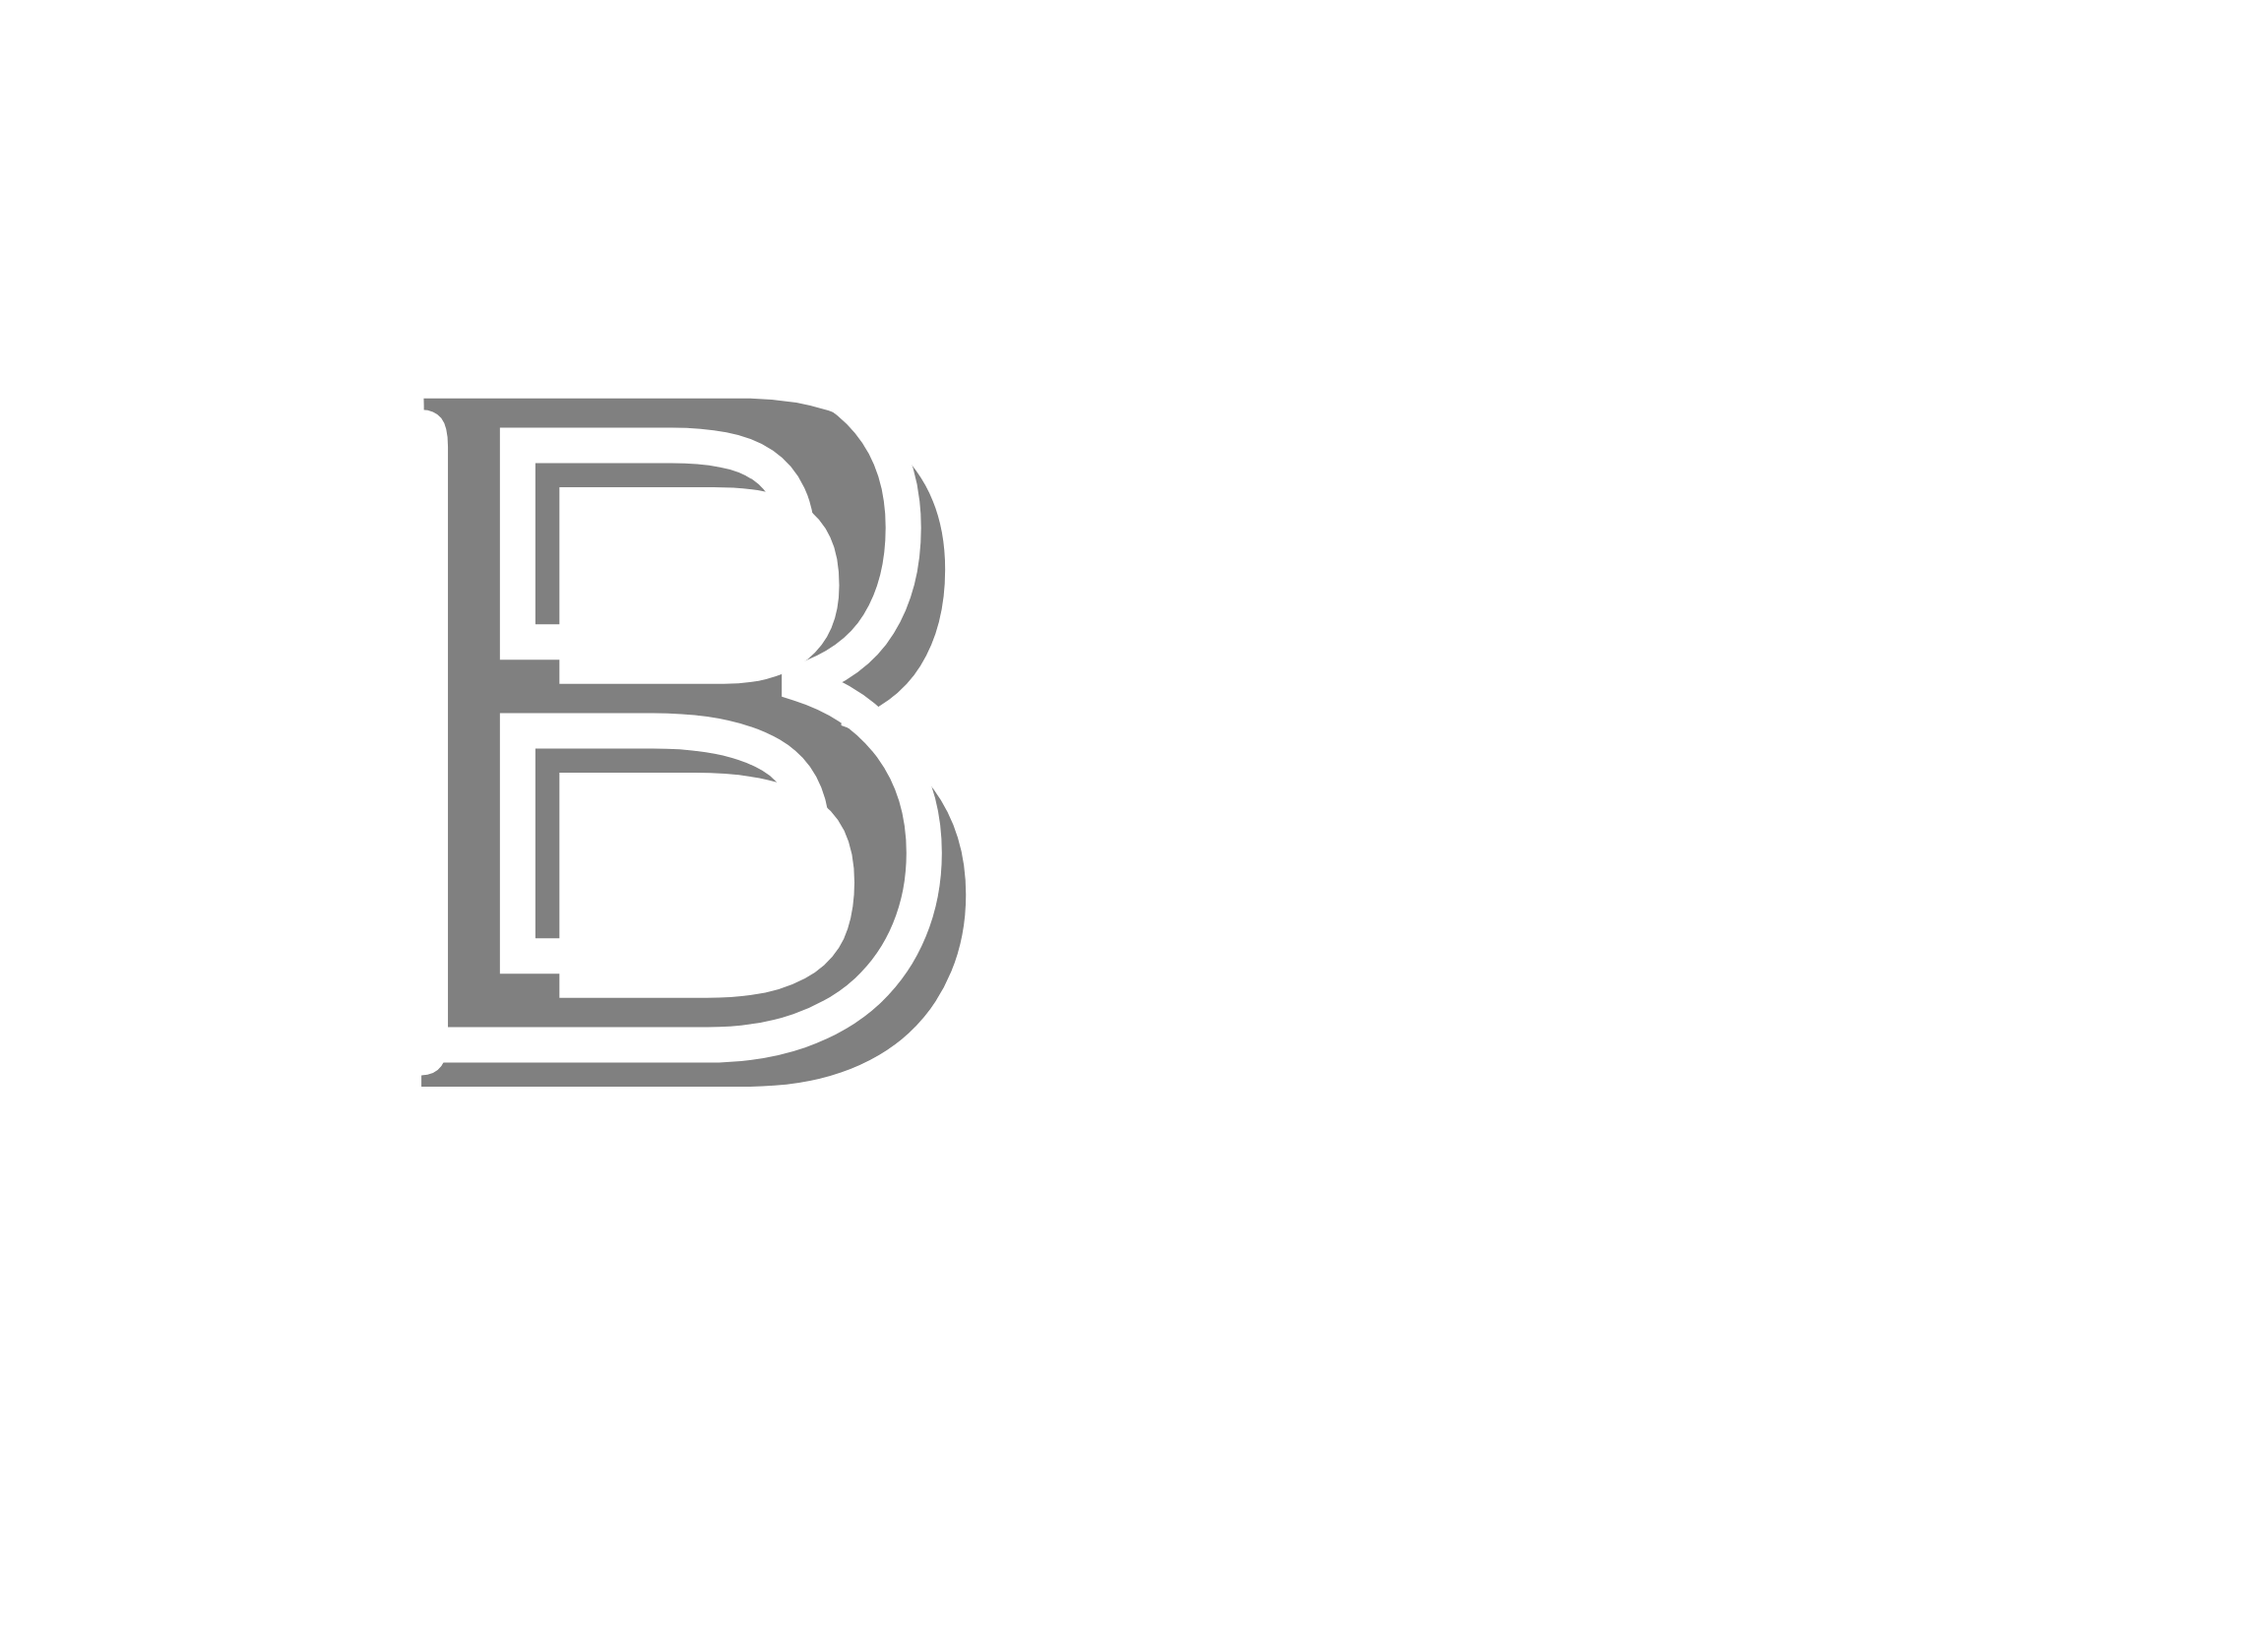 Buck's hoagie shop logo.